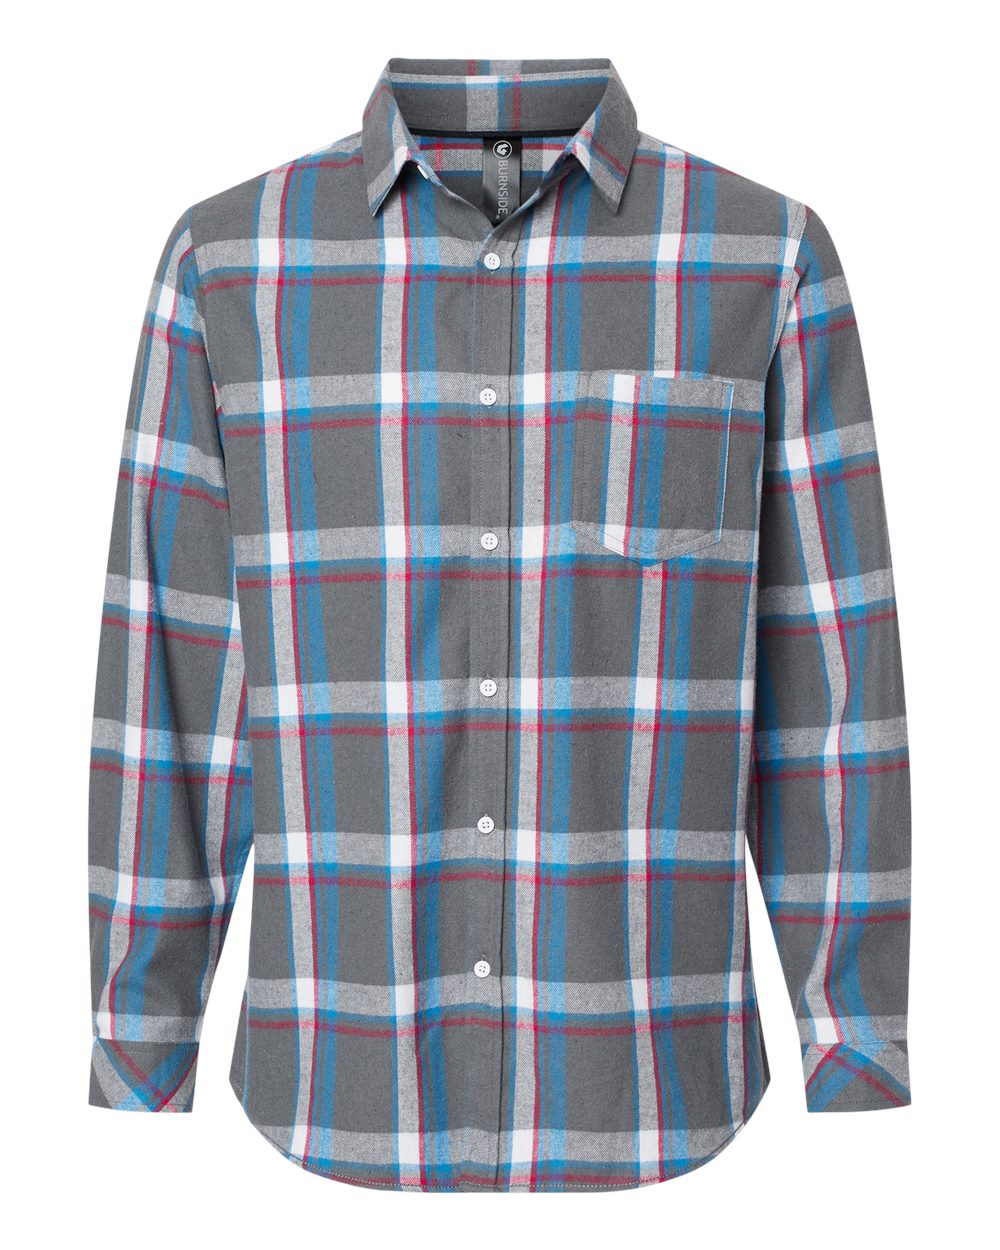 Burnside 8212 - Woven Plaid Flannel Shirt With Biased Pocket